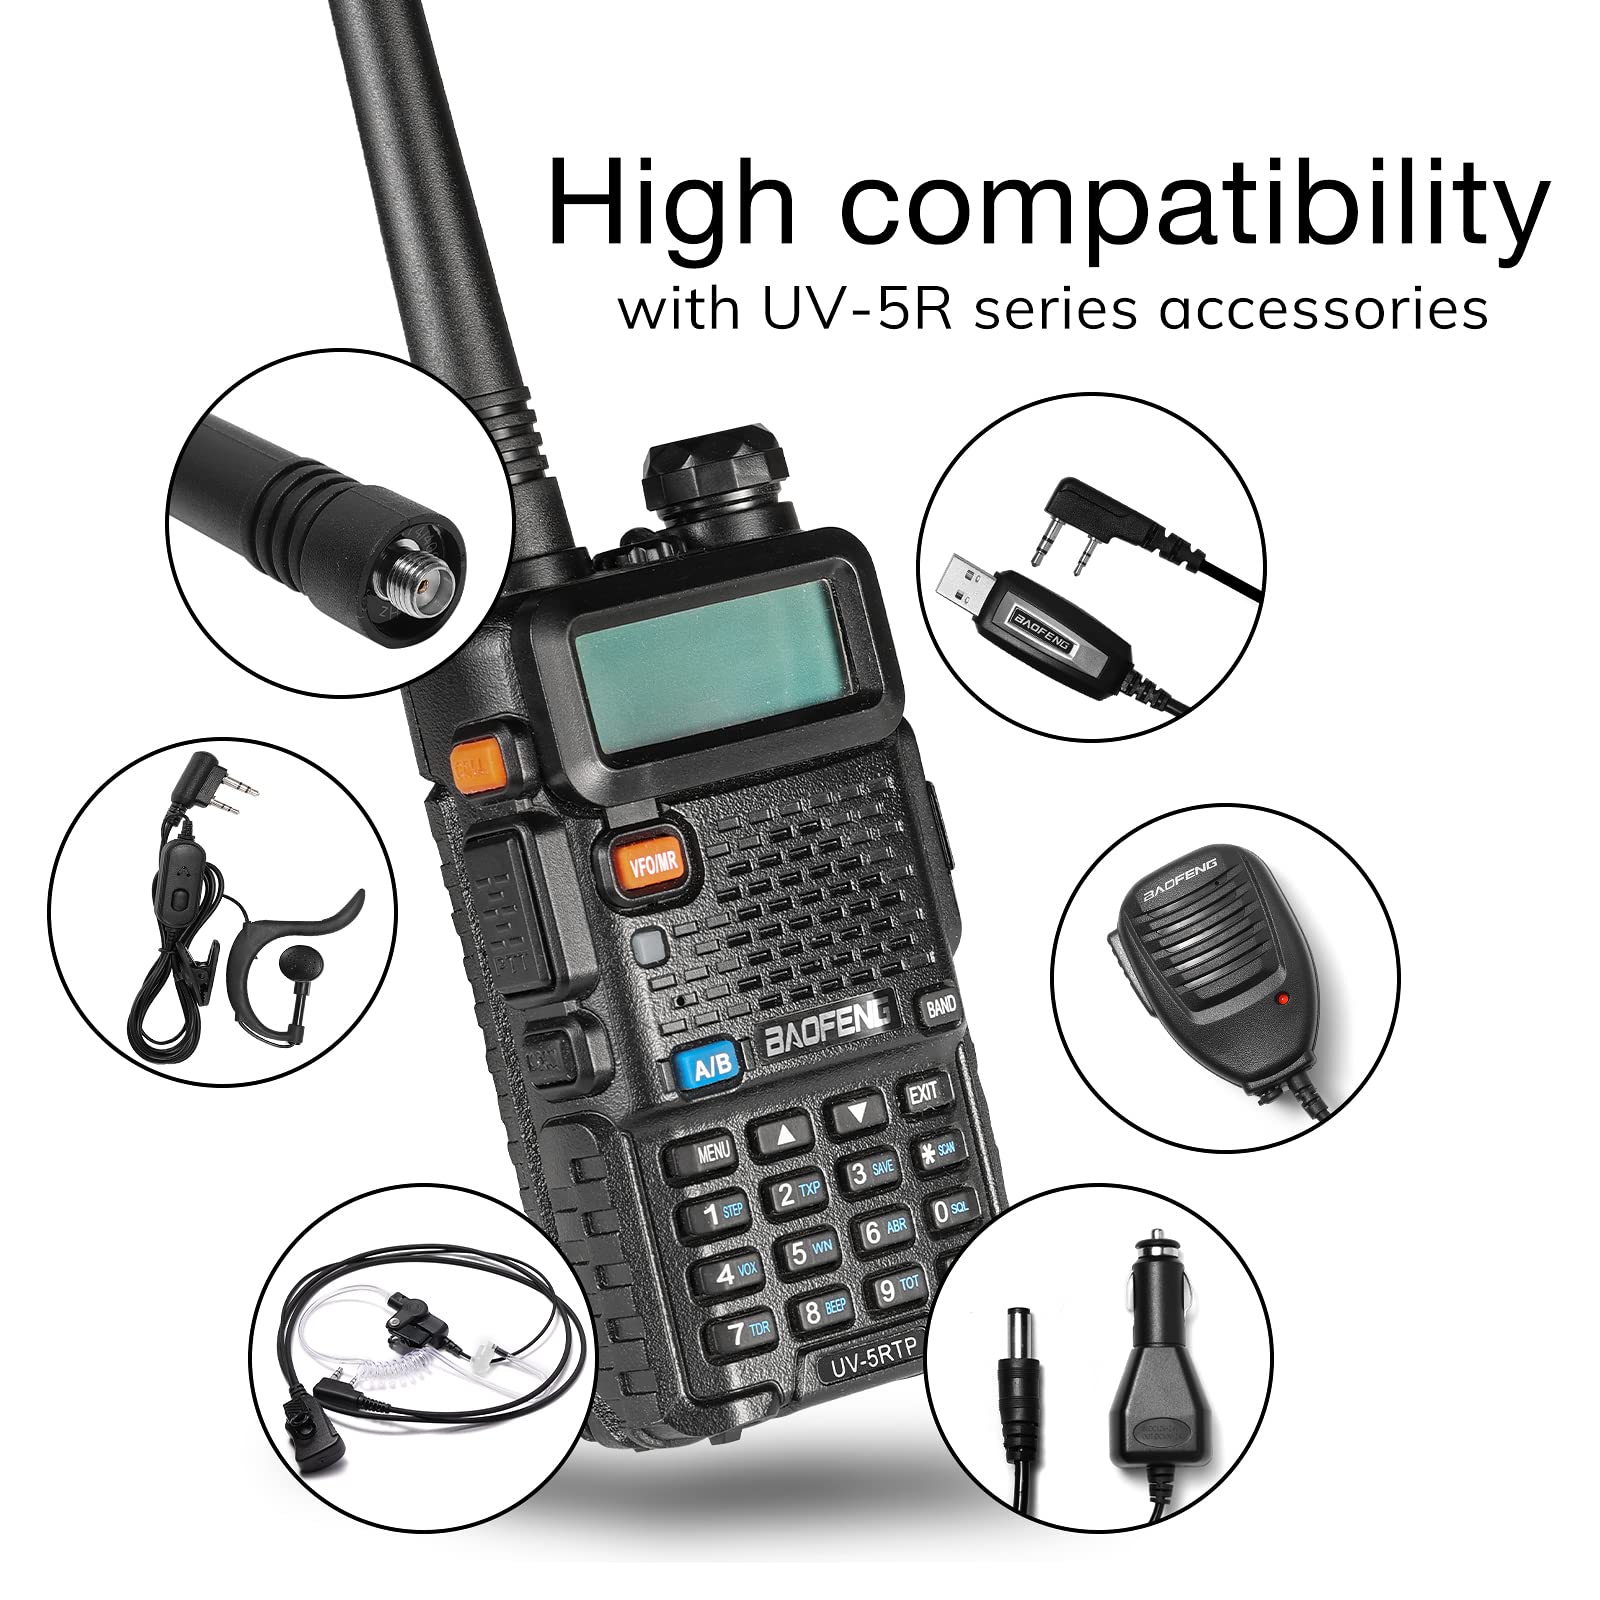 Baofeng UV-5RTP Dual Band Two Way Radio, UV-5R 8W High Power Version, Ham Radio Handheld with Earpiece, Black